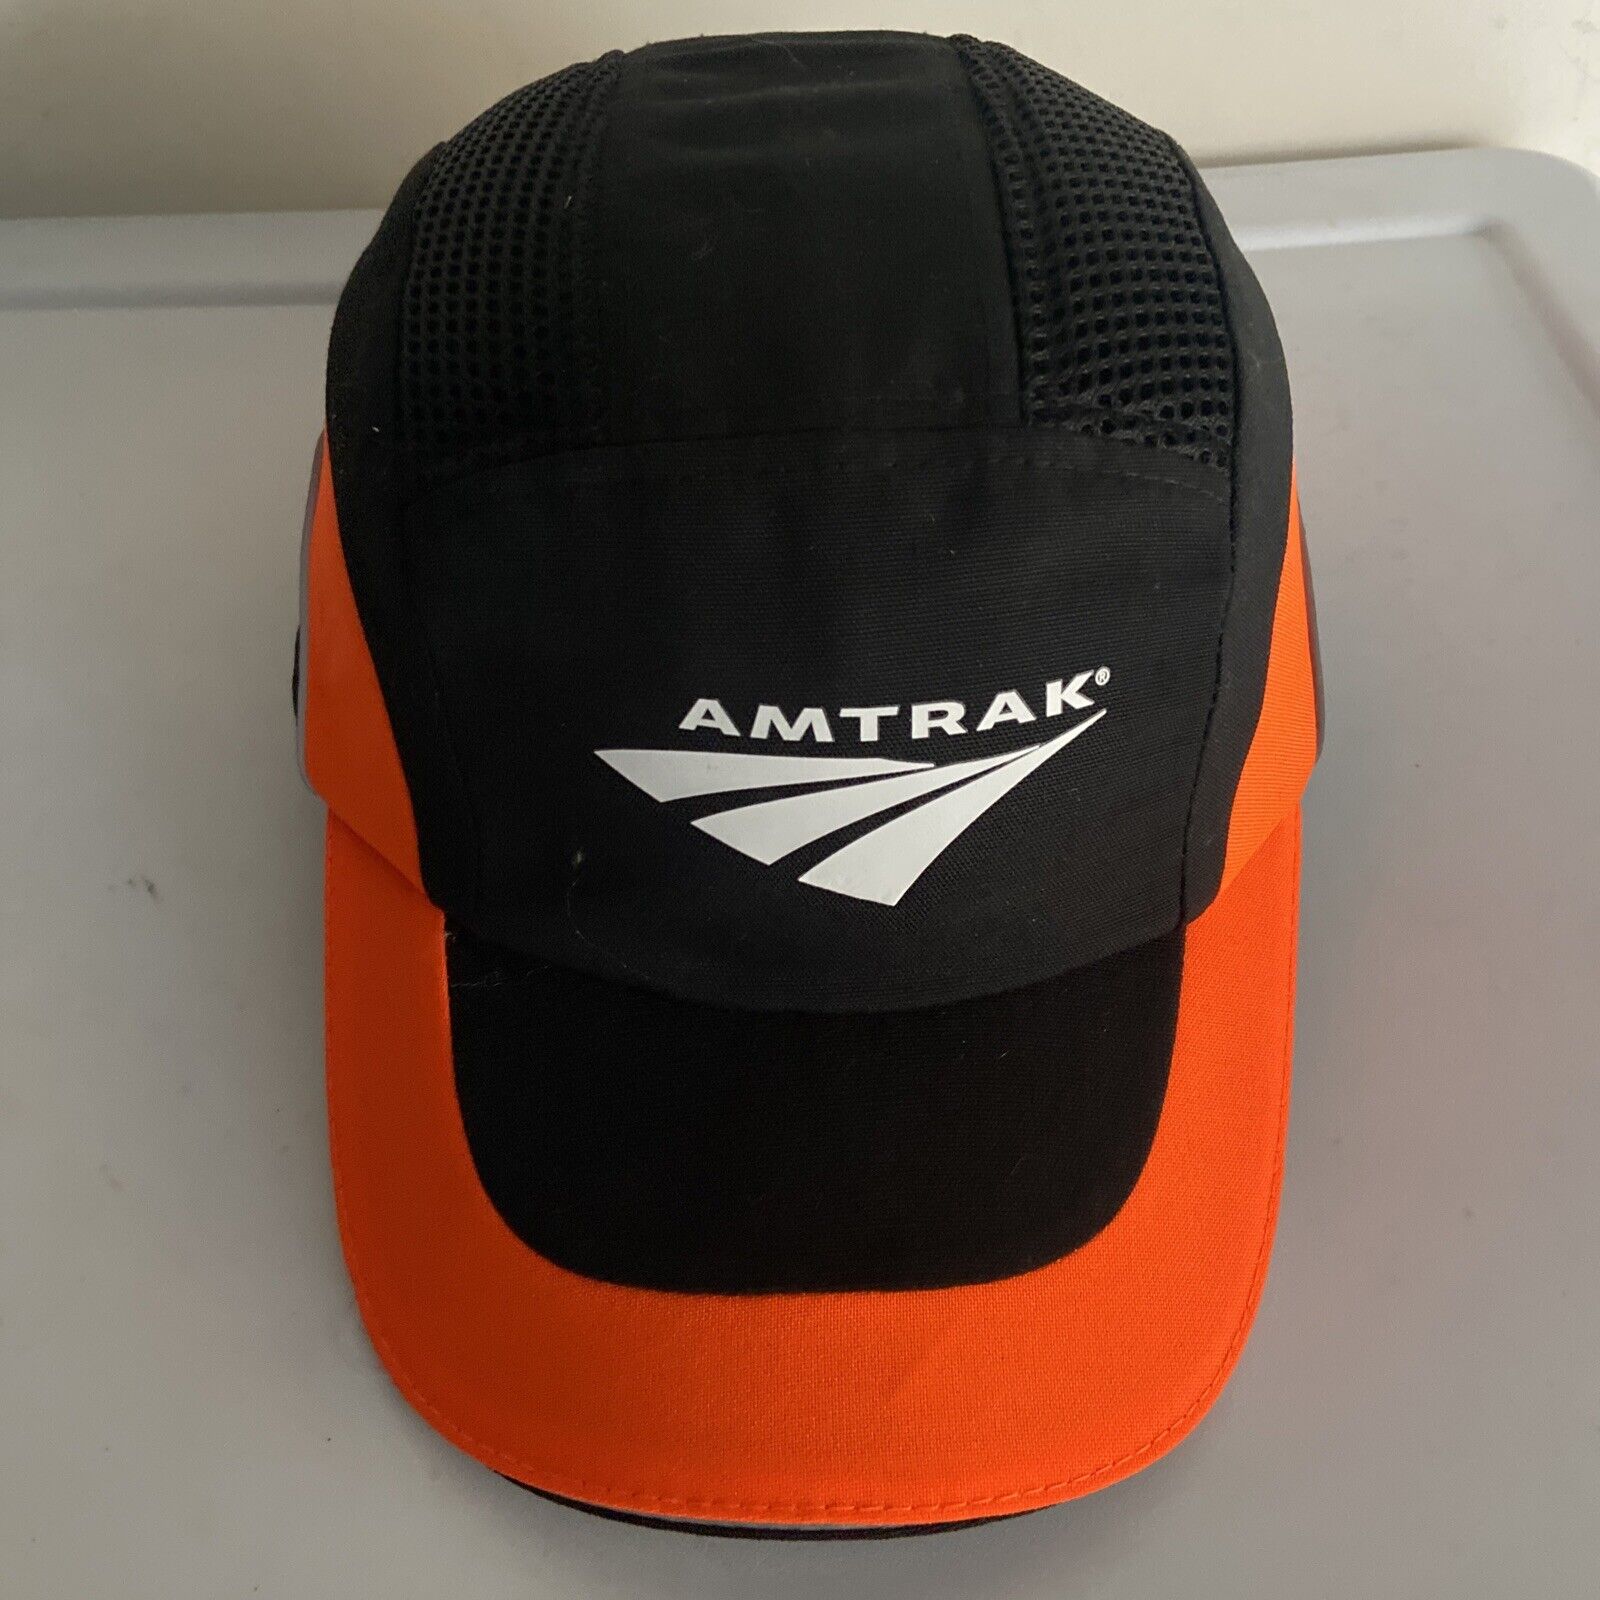 Amtrak Railroad JSP Soft Hard Cap With Foam Insert